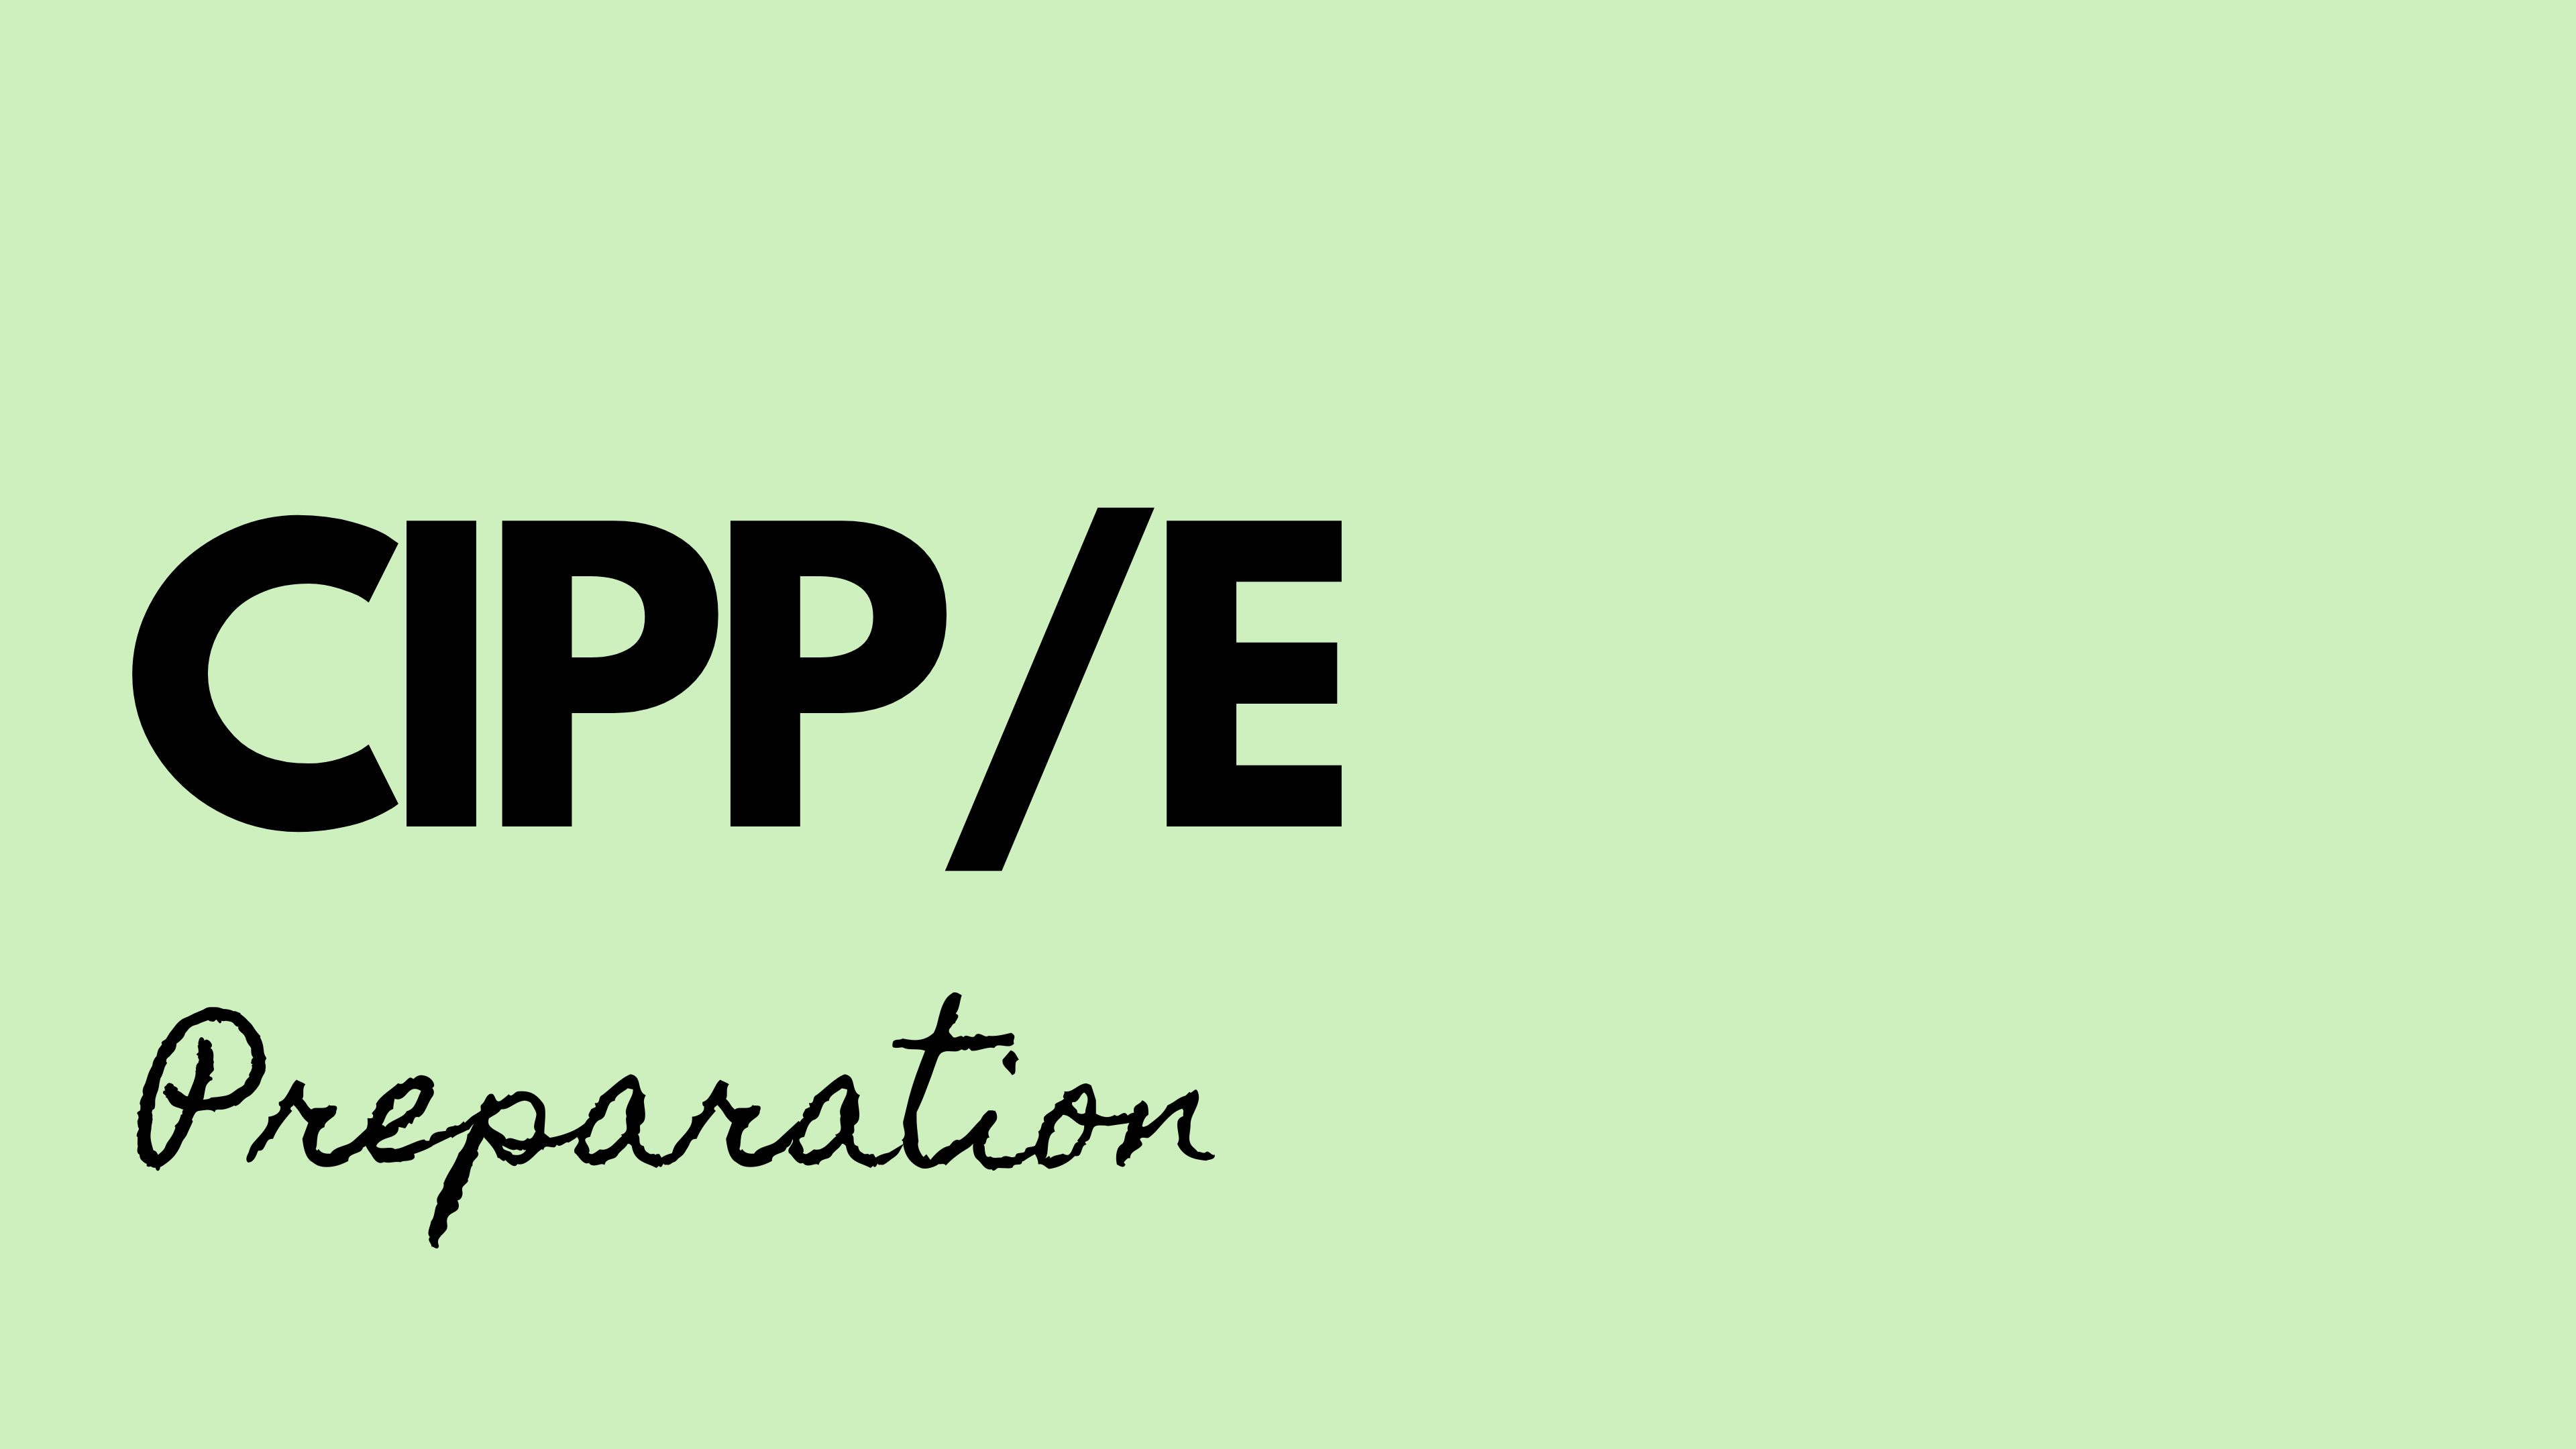 CIPPE - Preparation Teachable Image